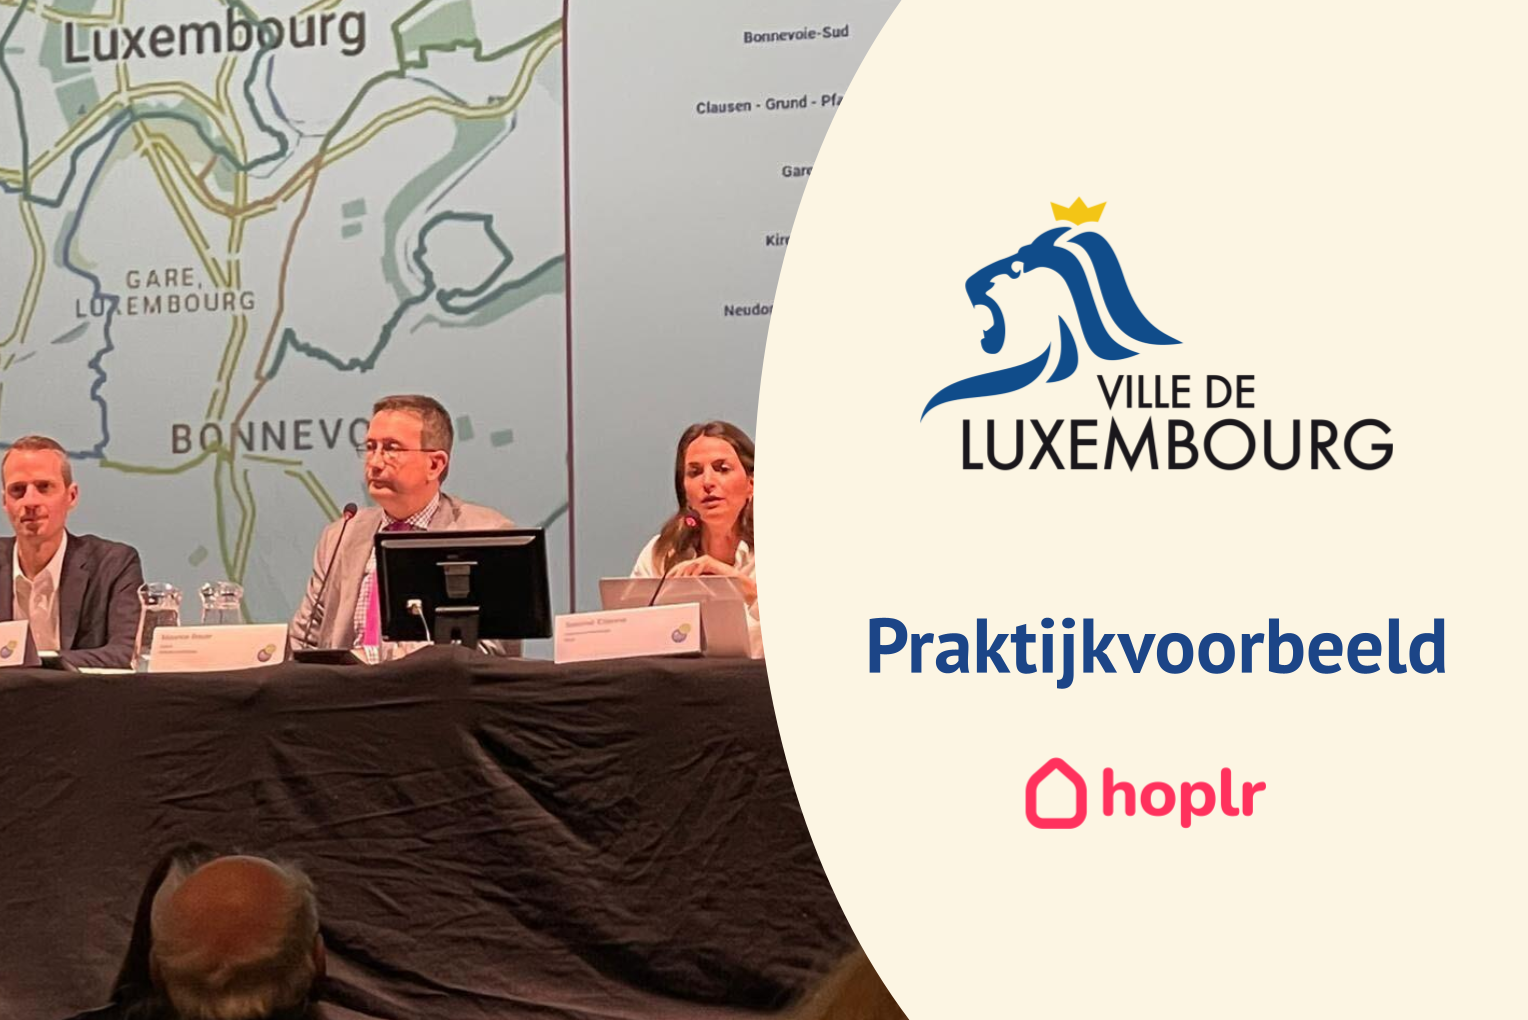 Luxemburg Stad: Sociale cohesie stimuleren ondanks grote diversiteit